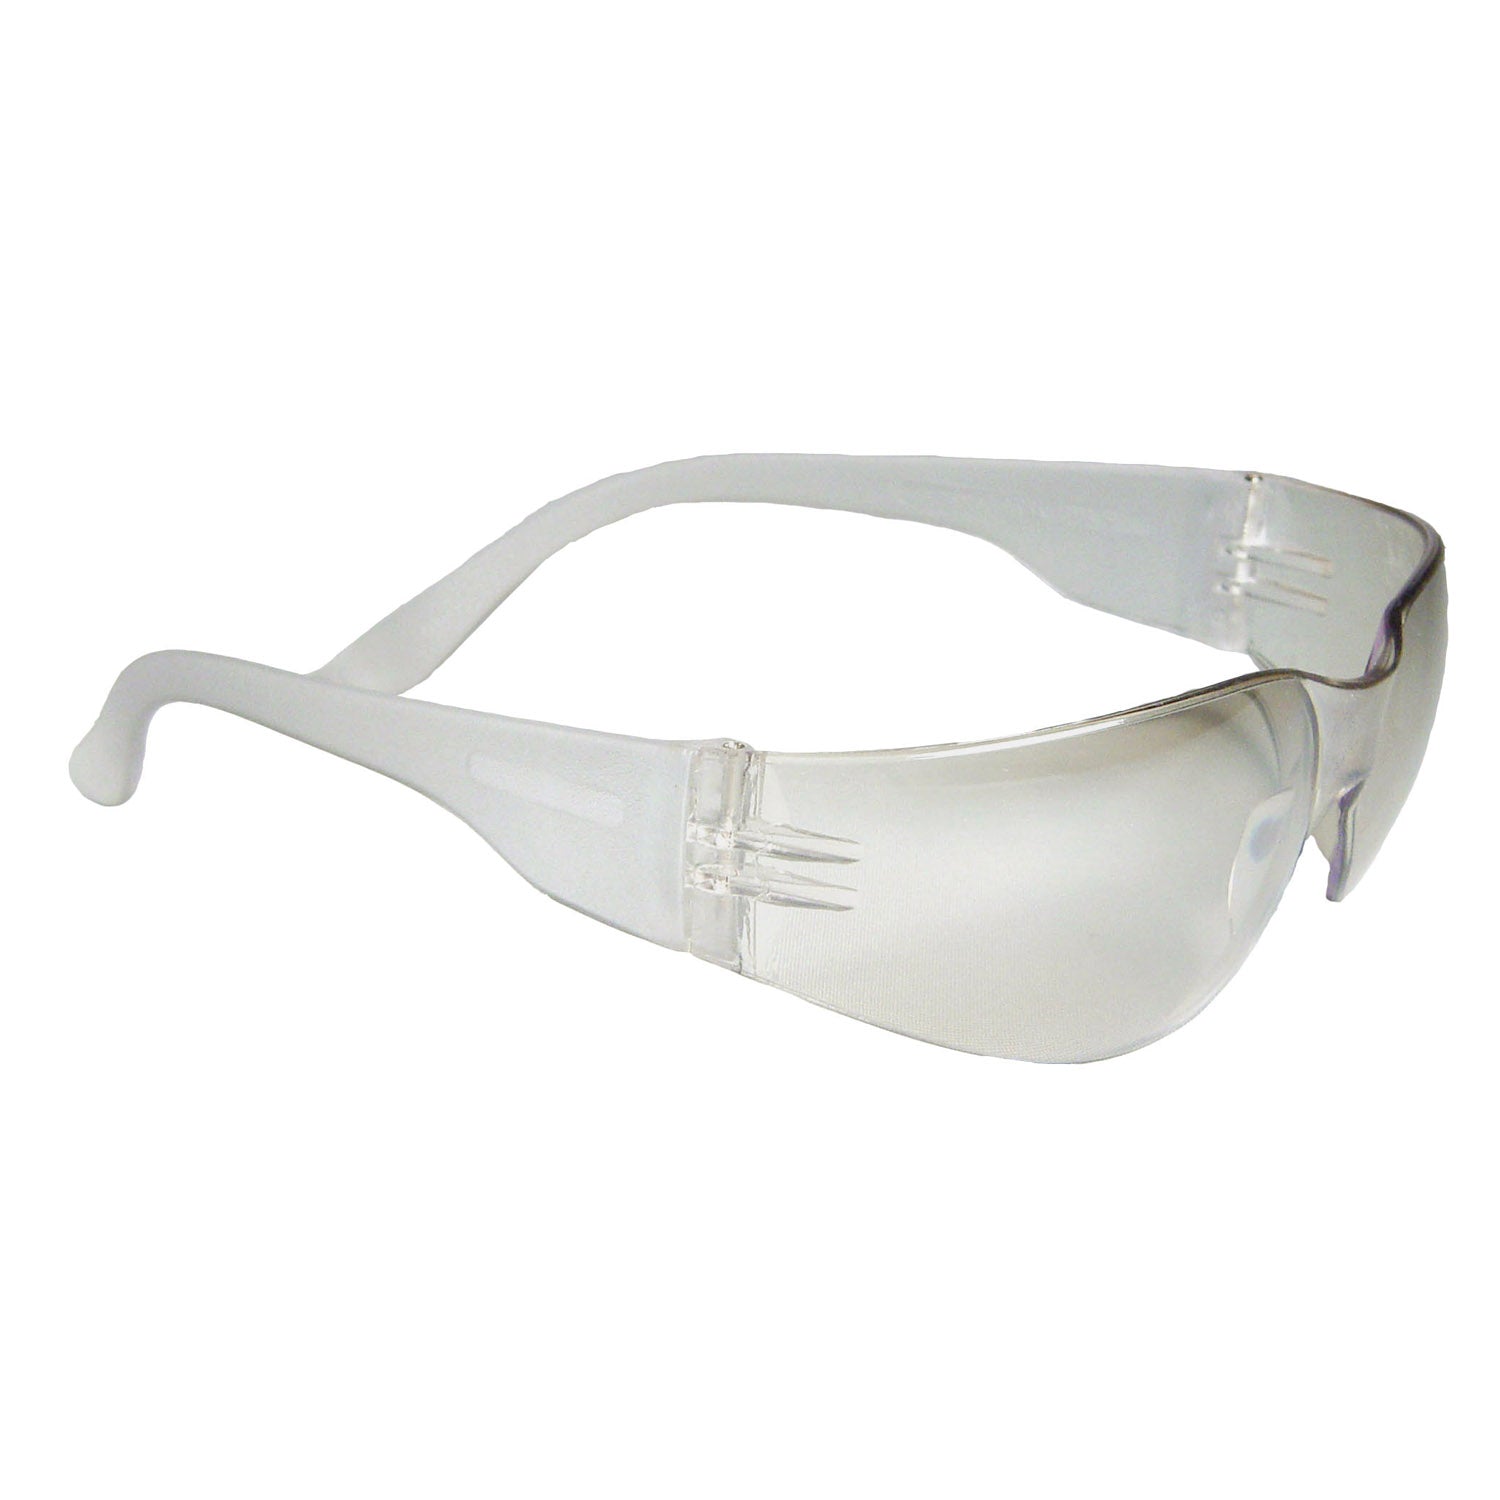 Radians Mirage™ Small Safety Eyewear-eSafety Supplies, Inc